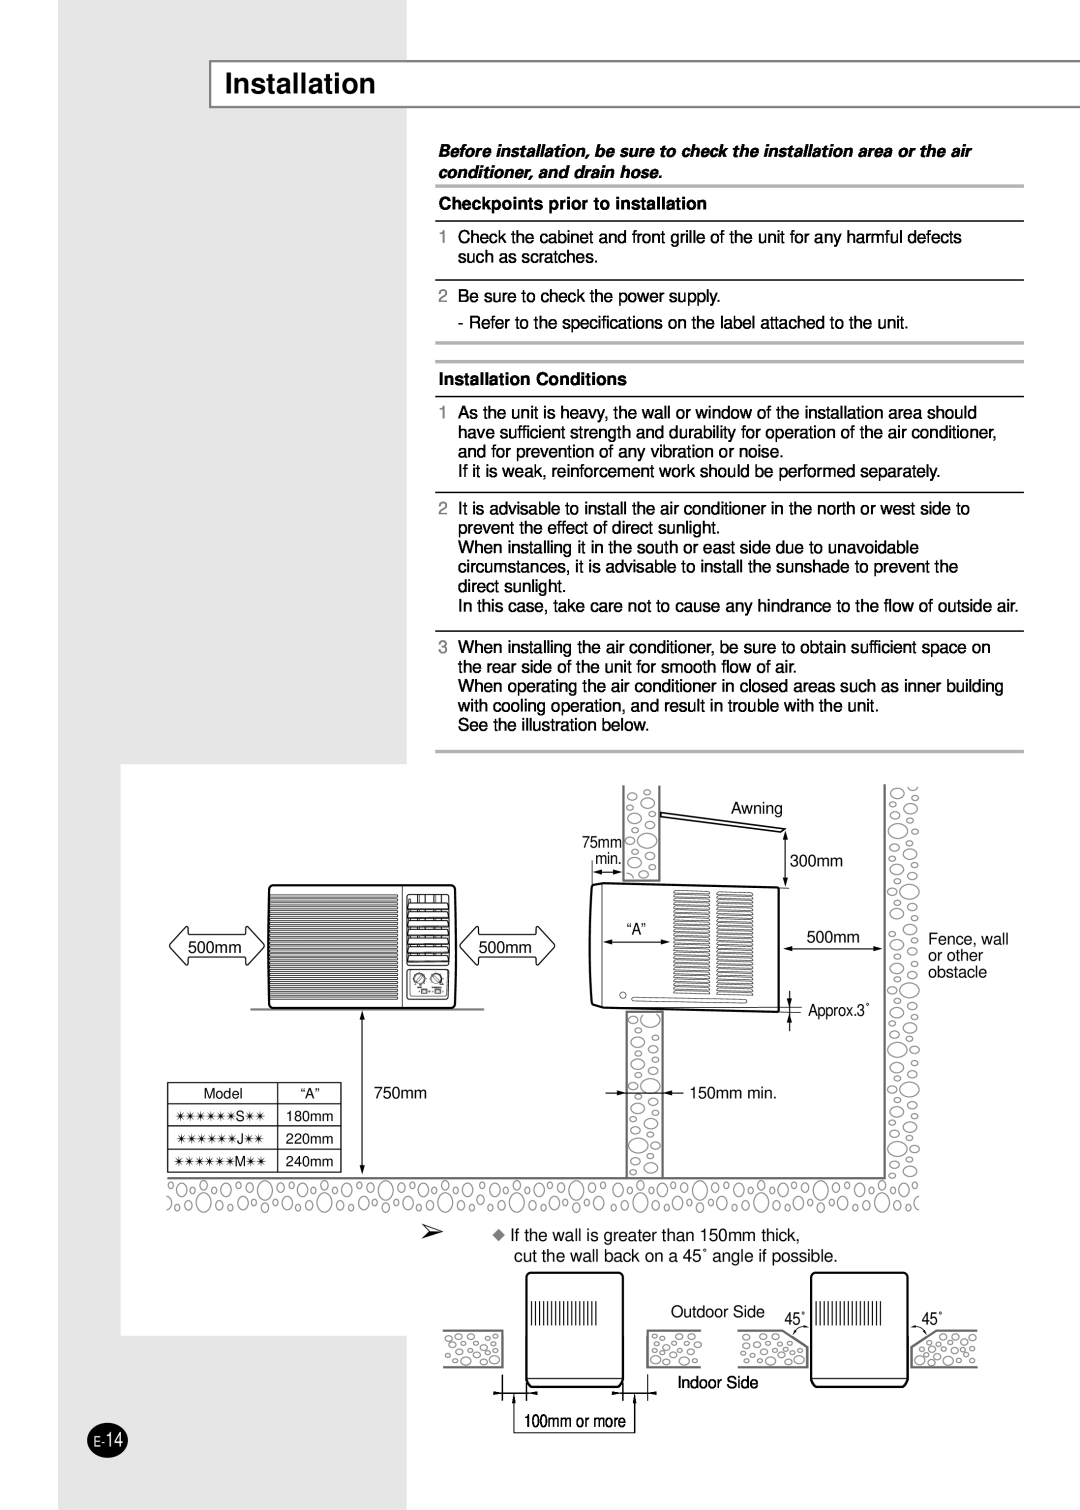 Samsung AW09A8SB manuel dutilisation Checkpoints prior to installation, Installation Conditions 